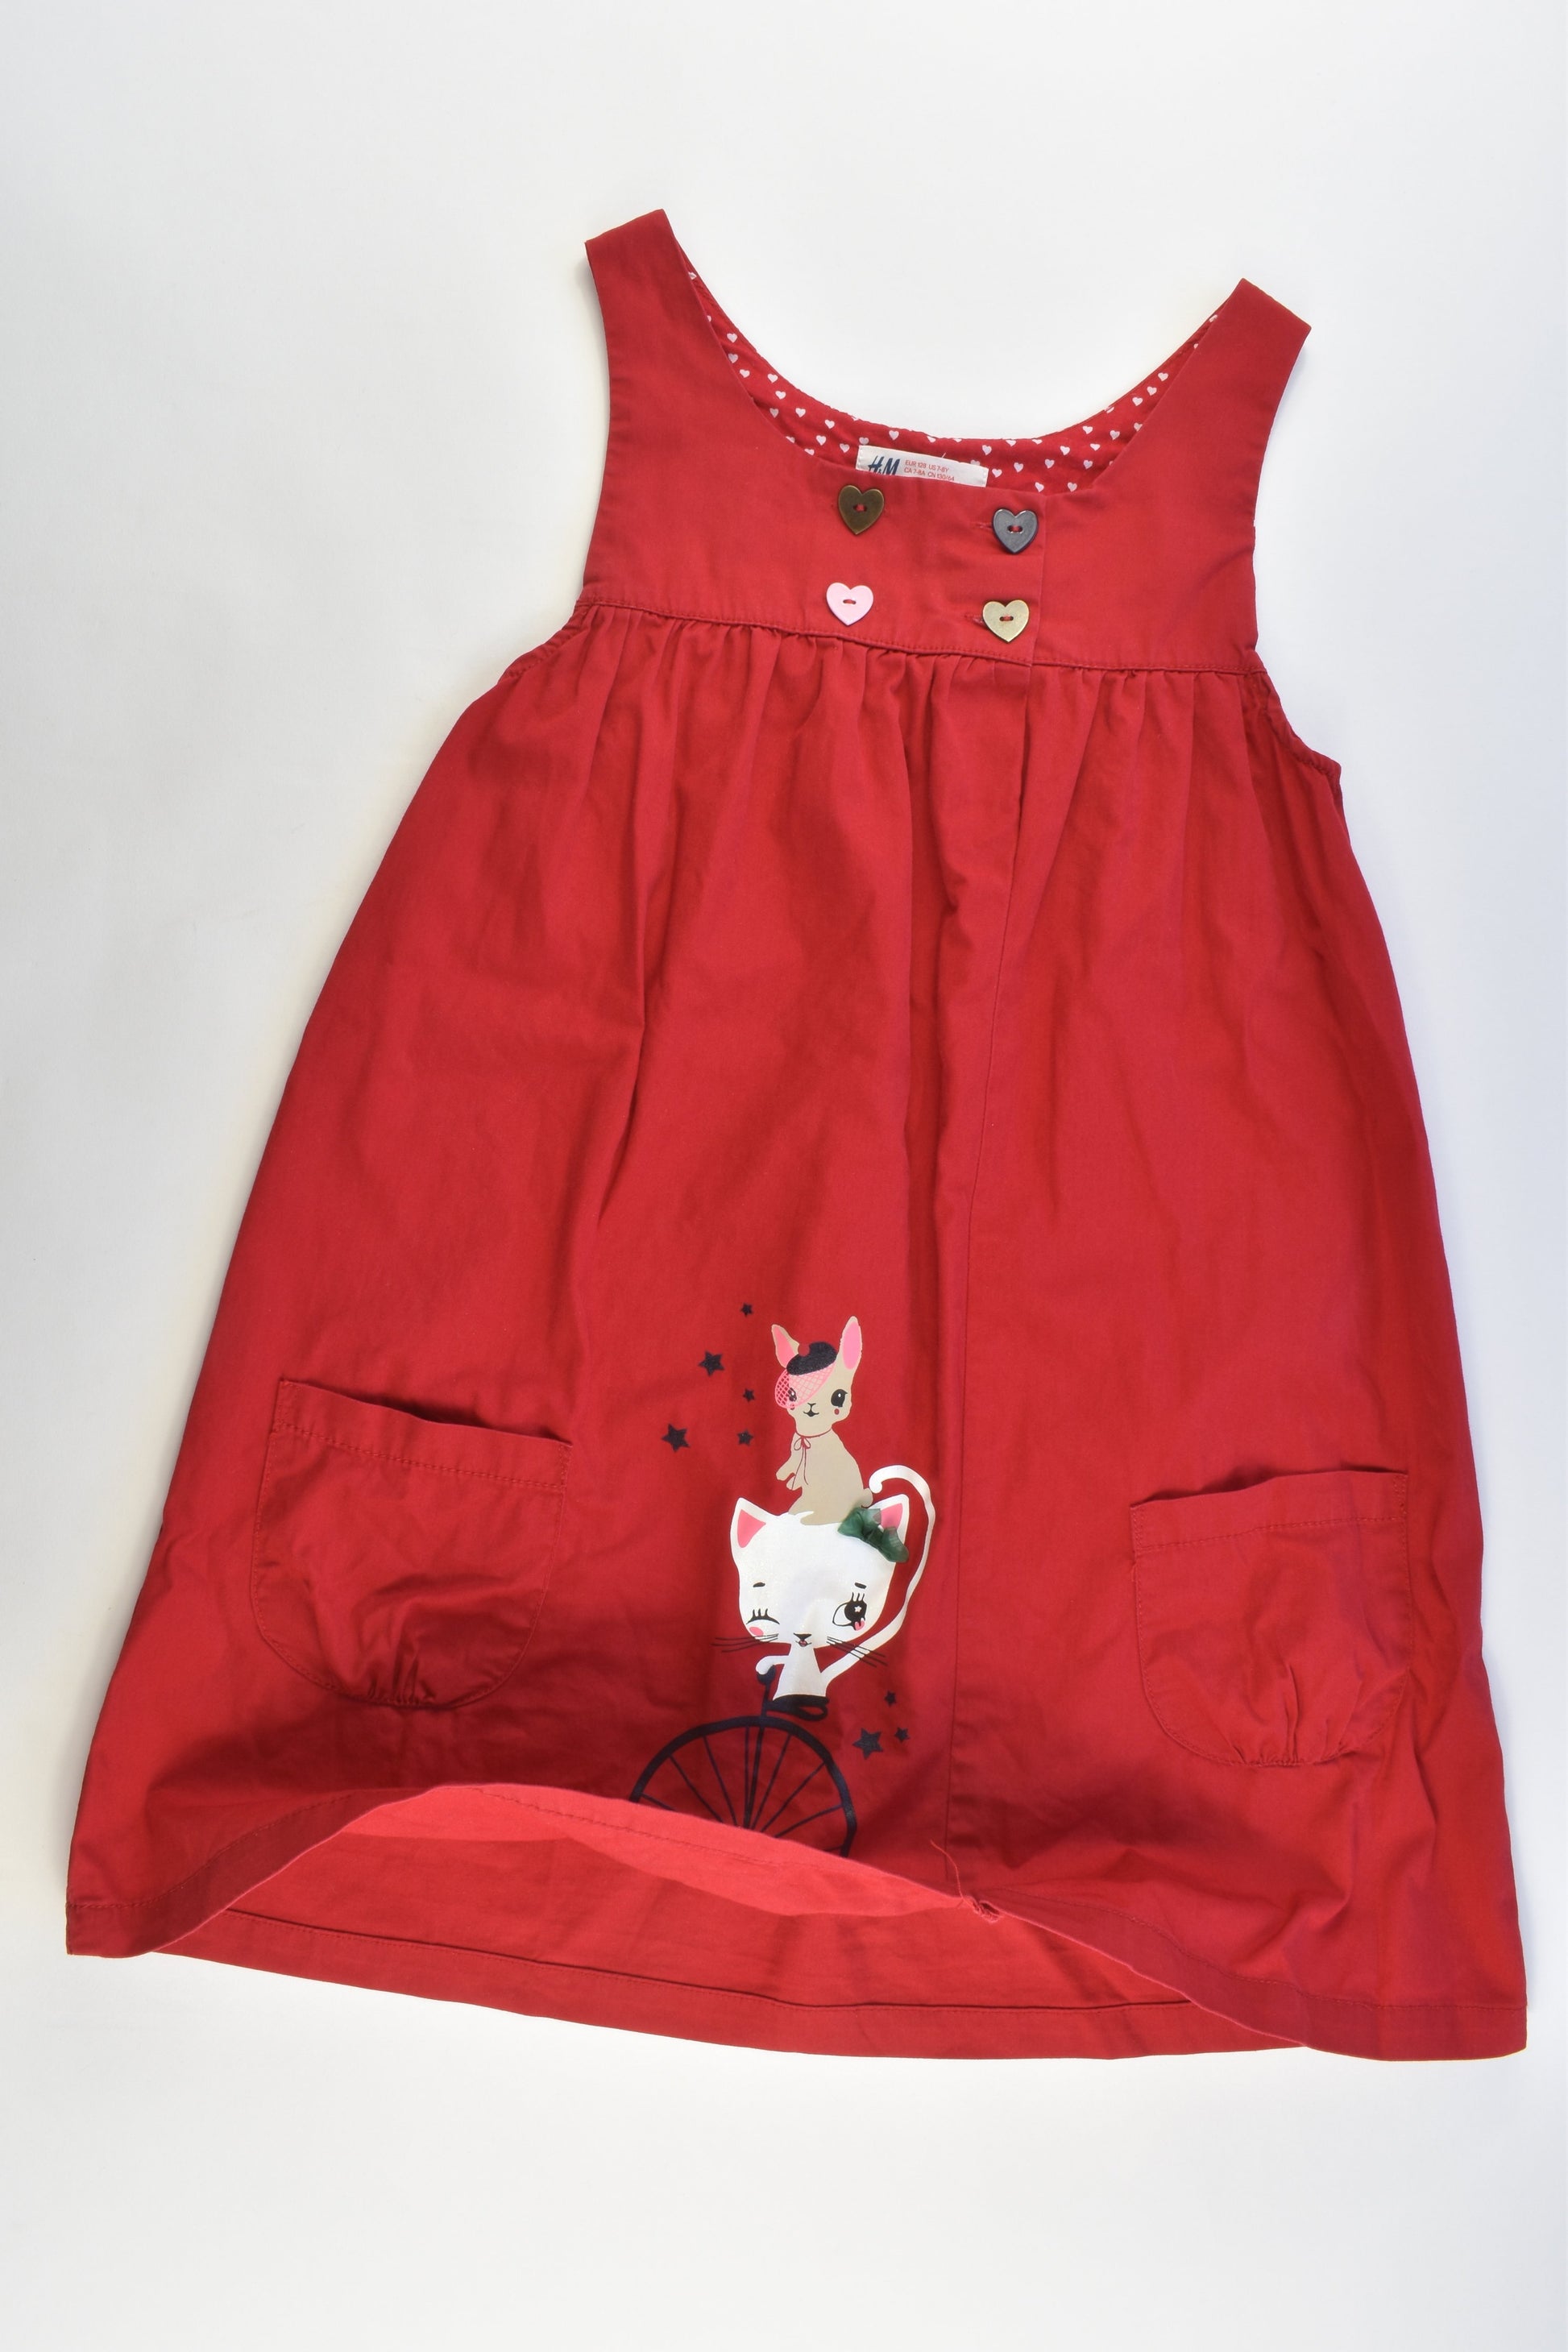 H&M Size 7-8 (128 cm) Dress